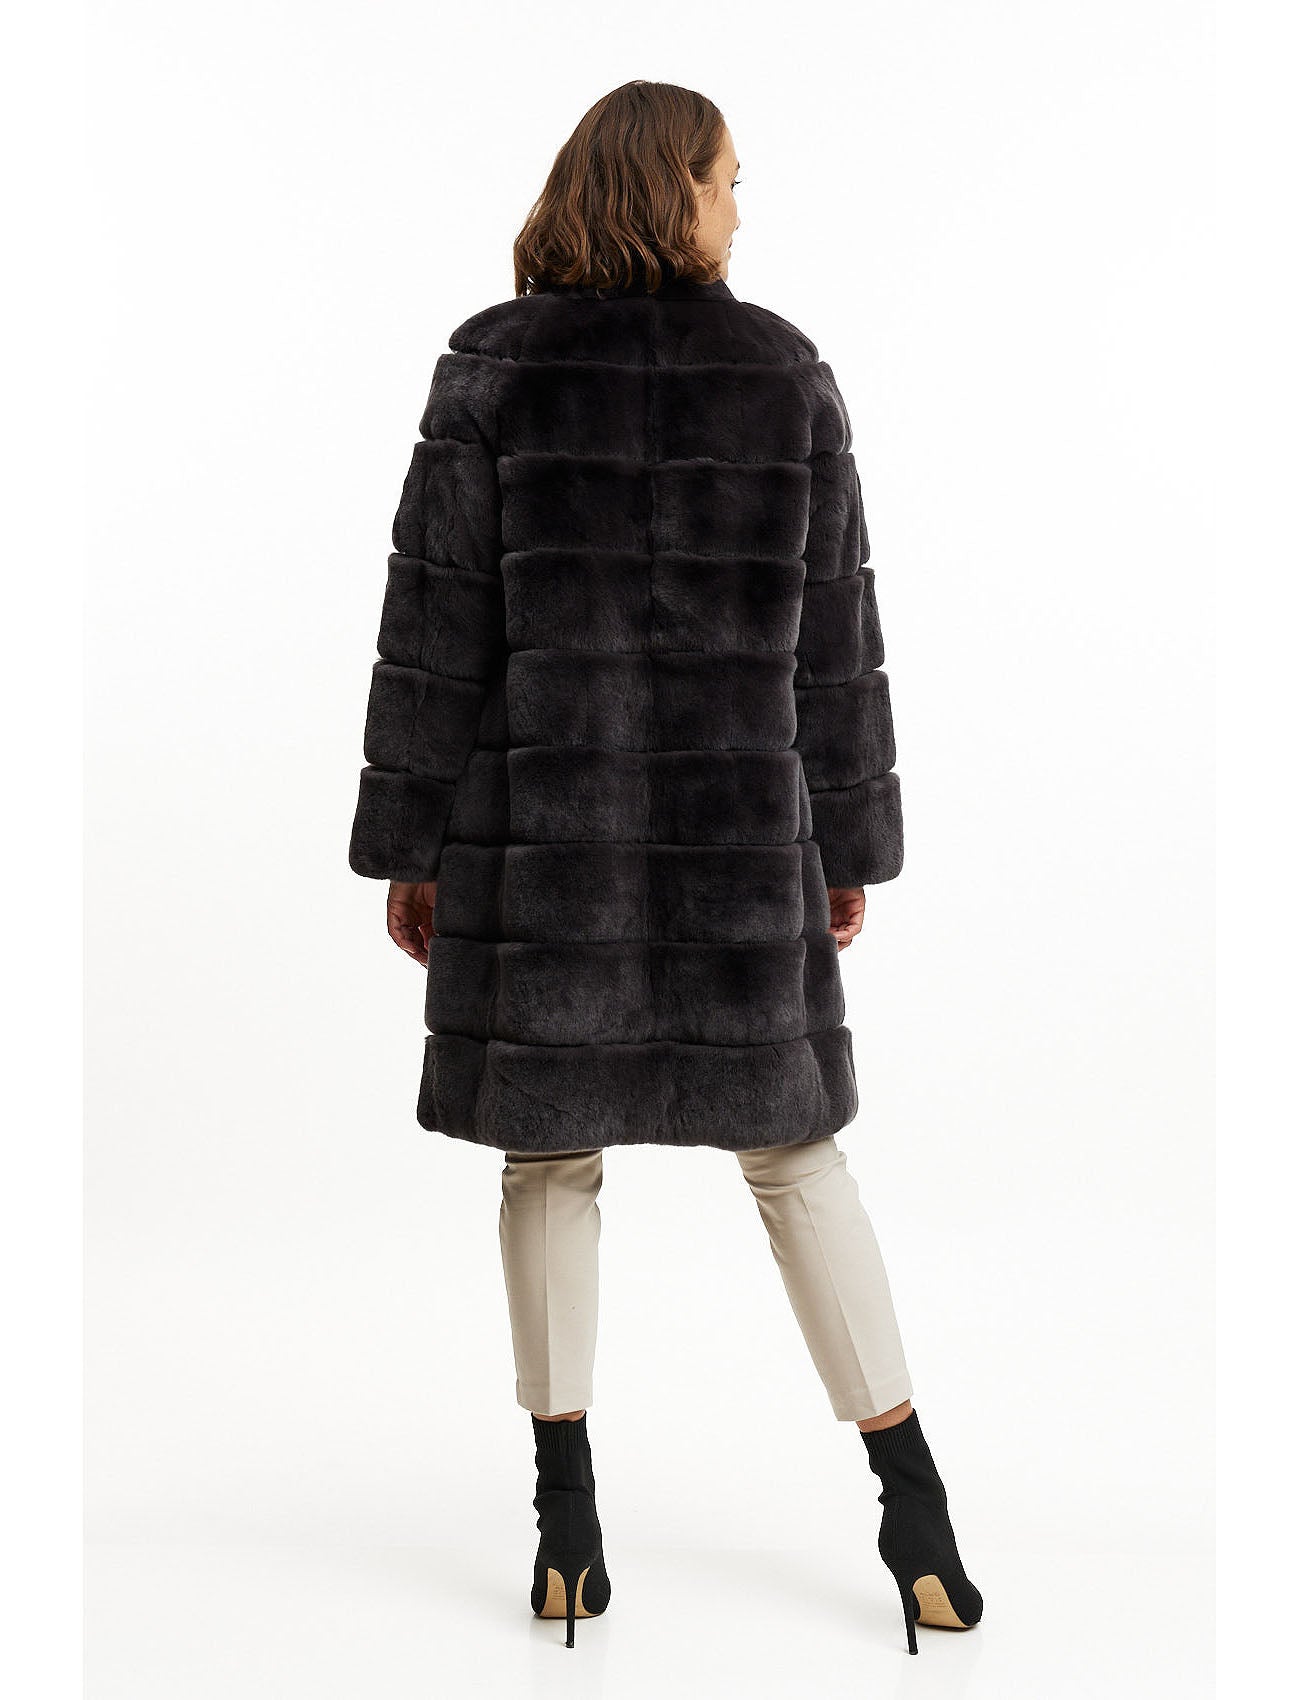 Fur jacket - basalt grey